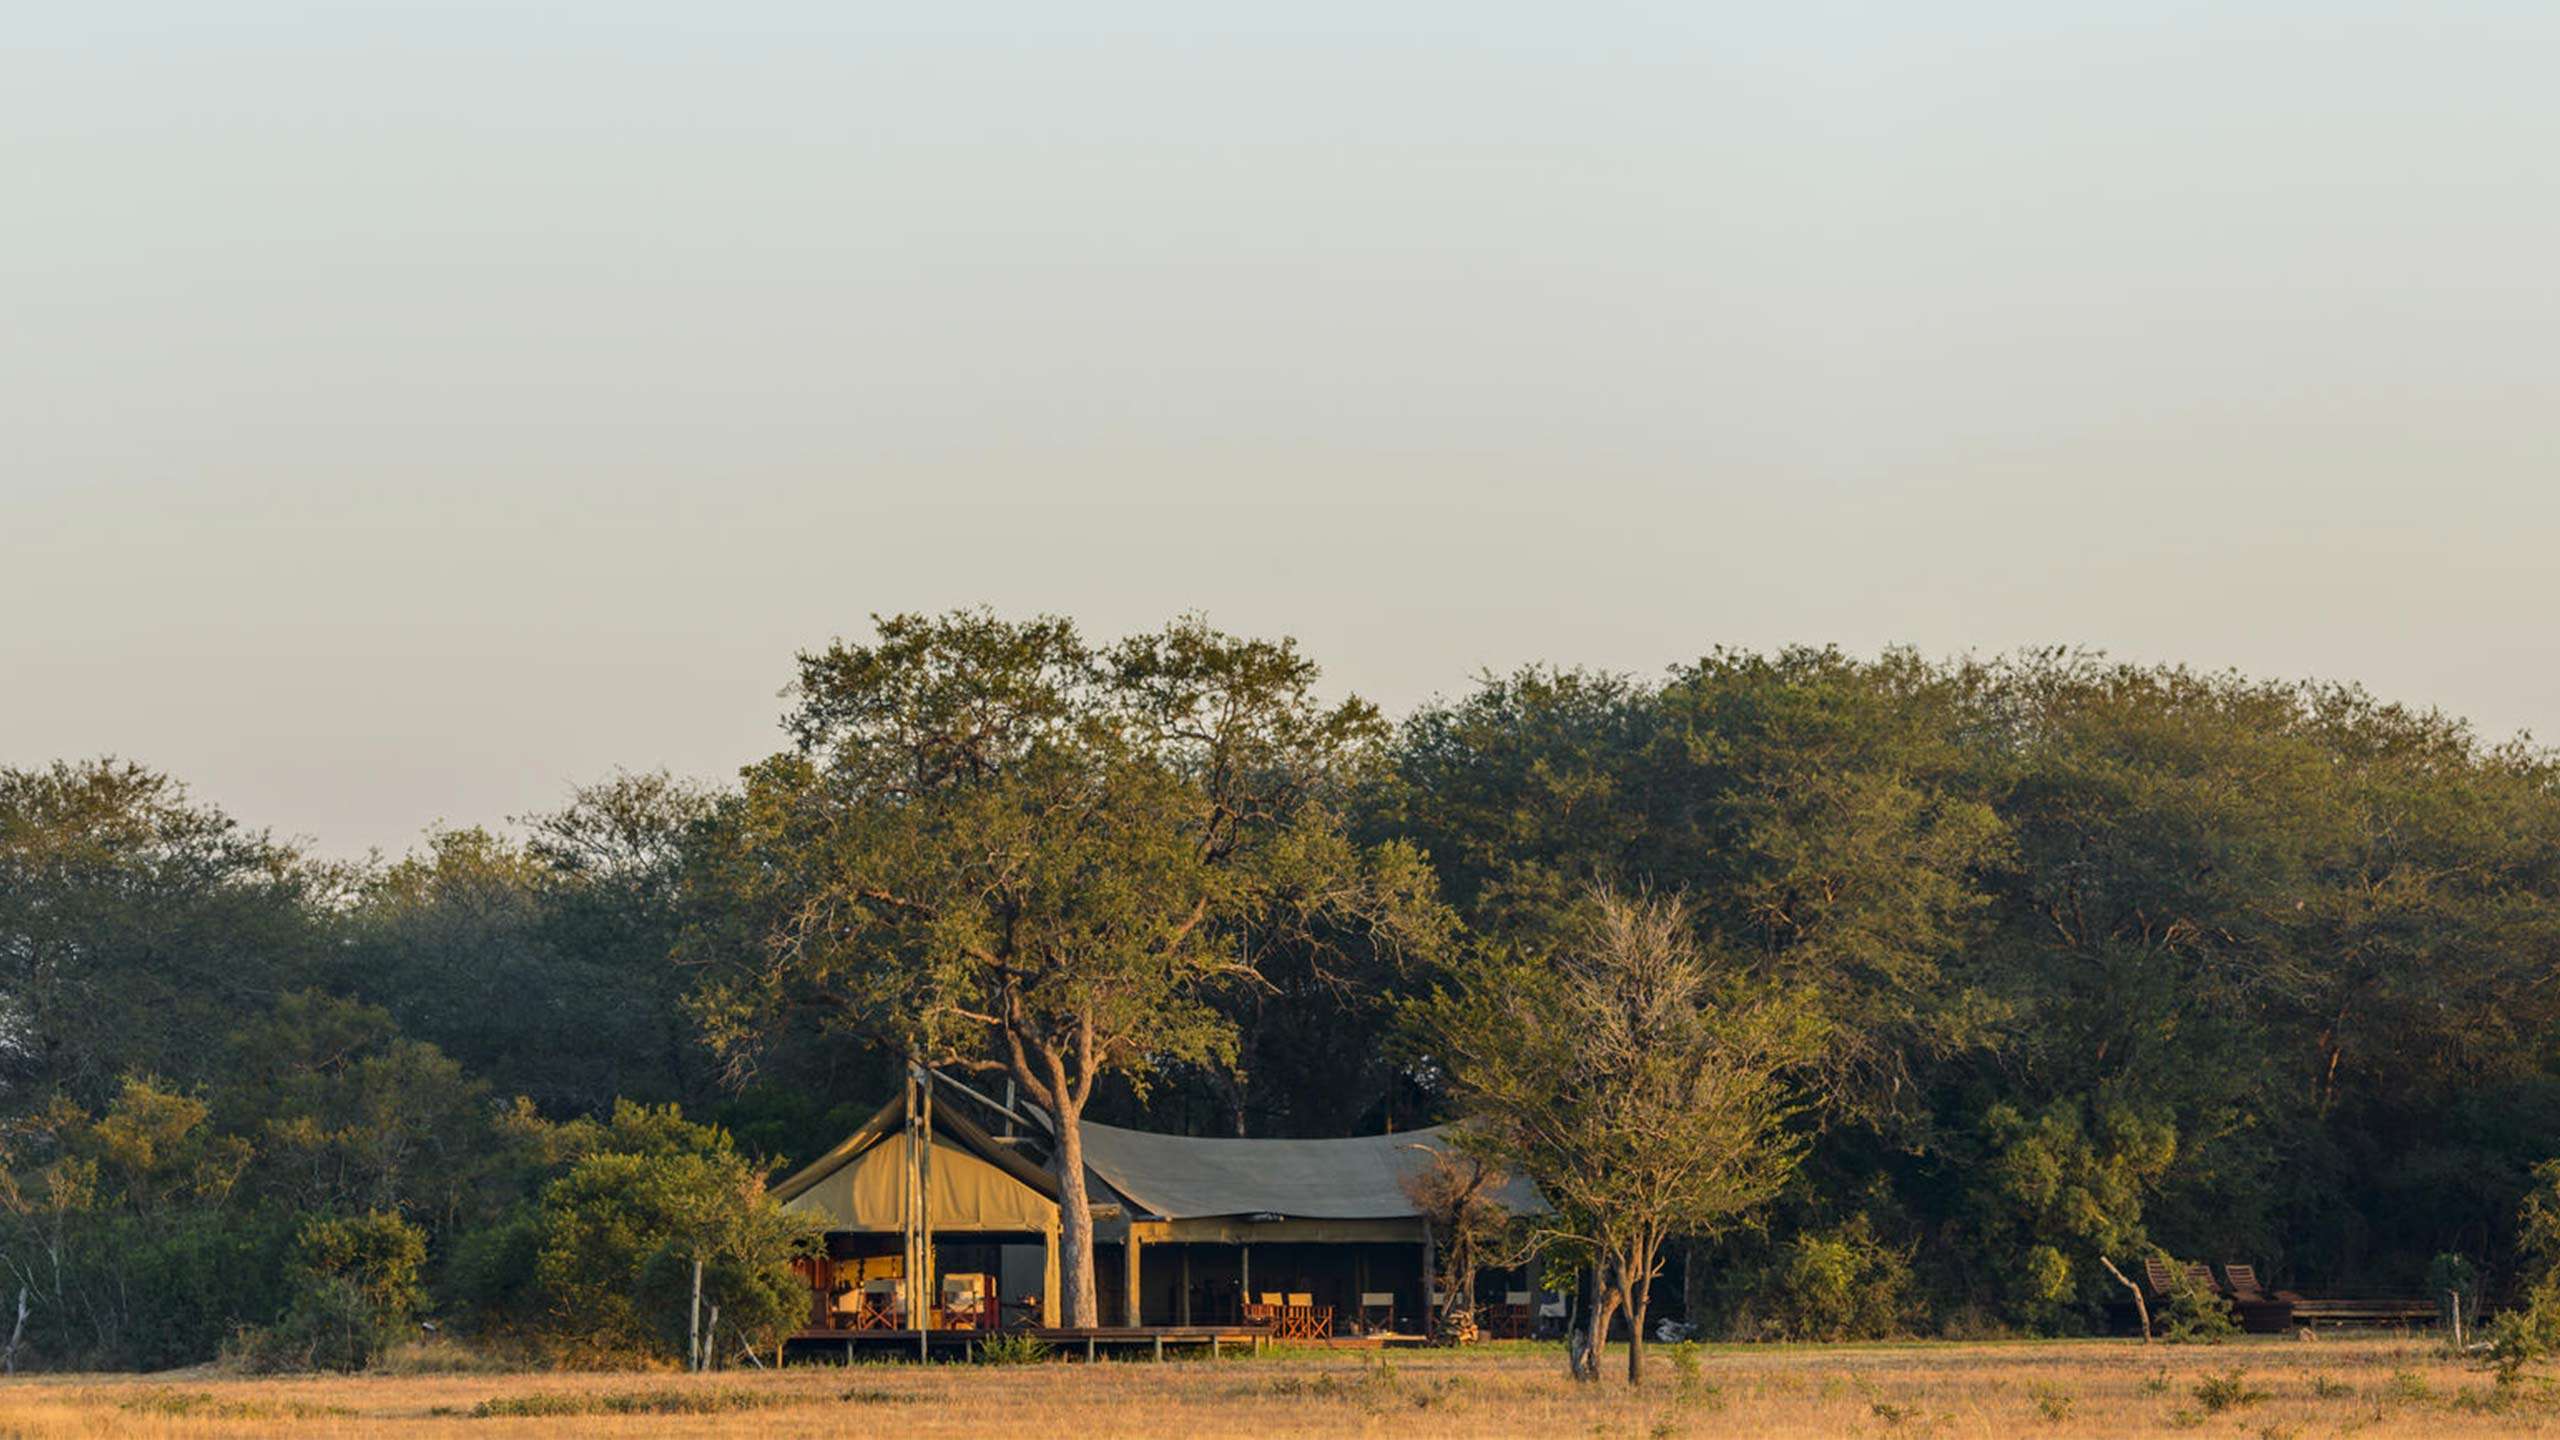 The Plains Camp, Home of Rhino Walking Safari